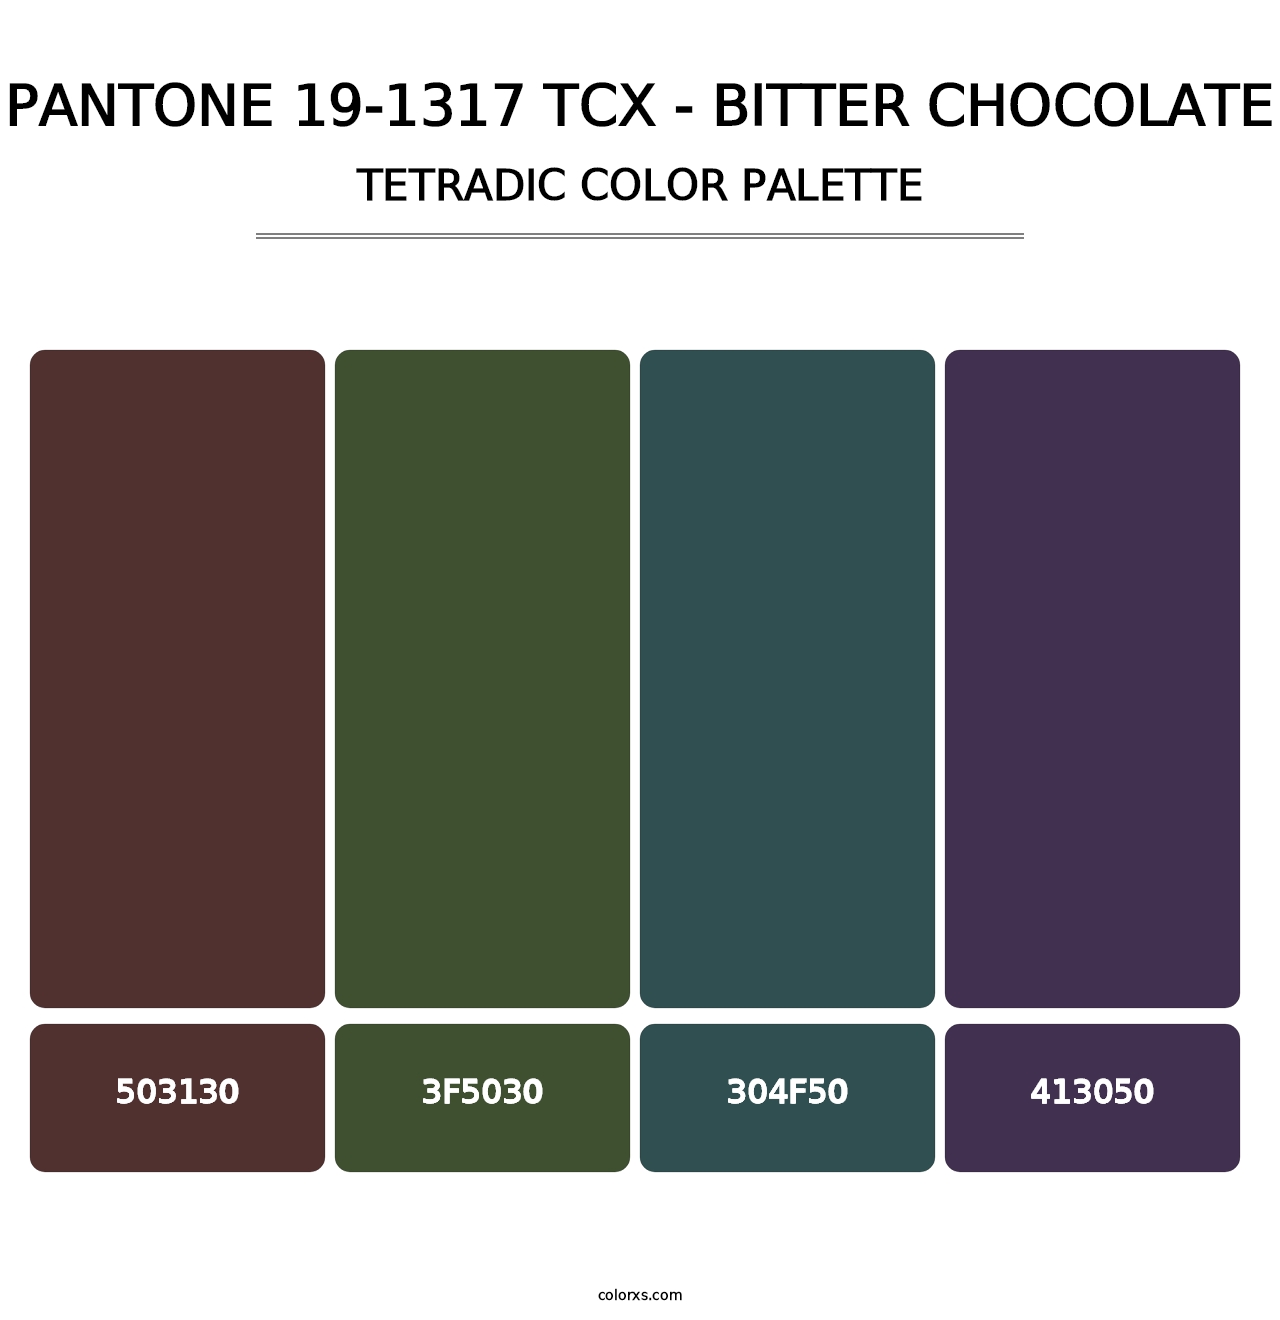 PANTONE 19-1317 TCX - Bitter Chocolate - Tetradic Color Palette